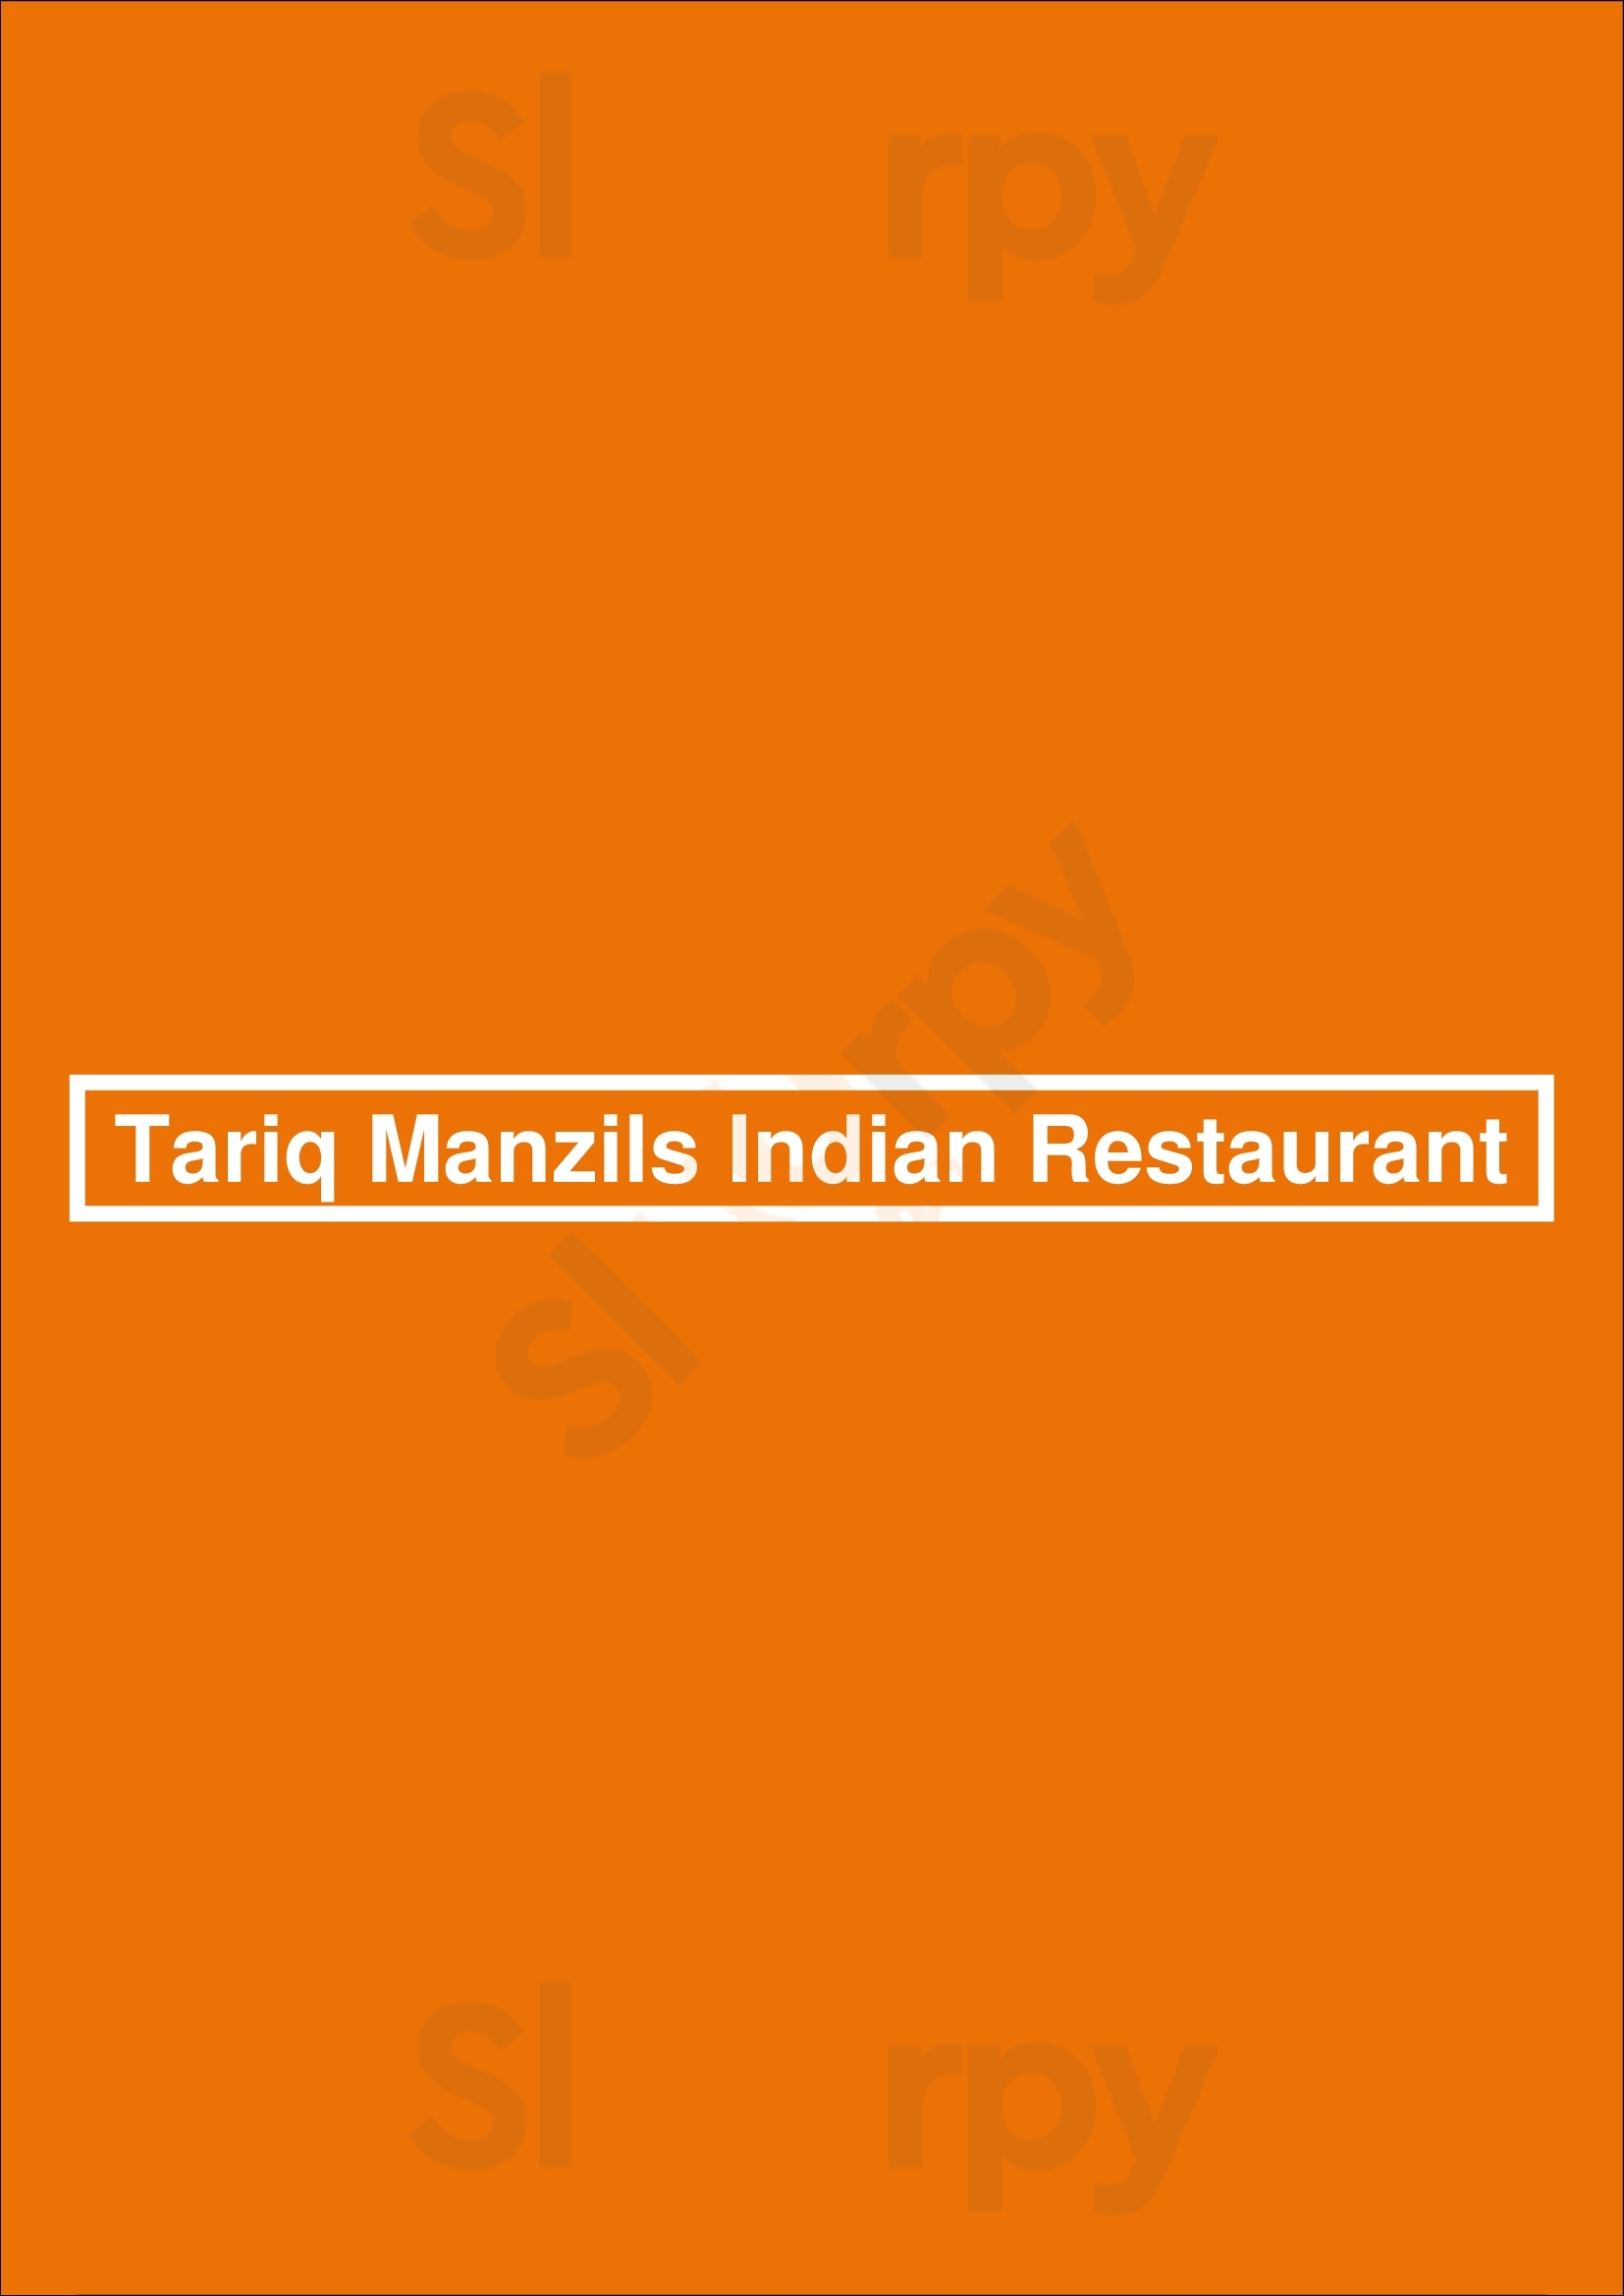 Tariq Manzils Indian Restaurant Southampton Menu - 1